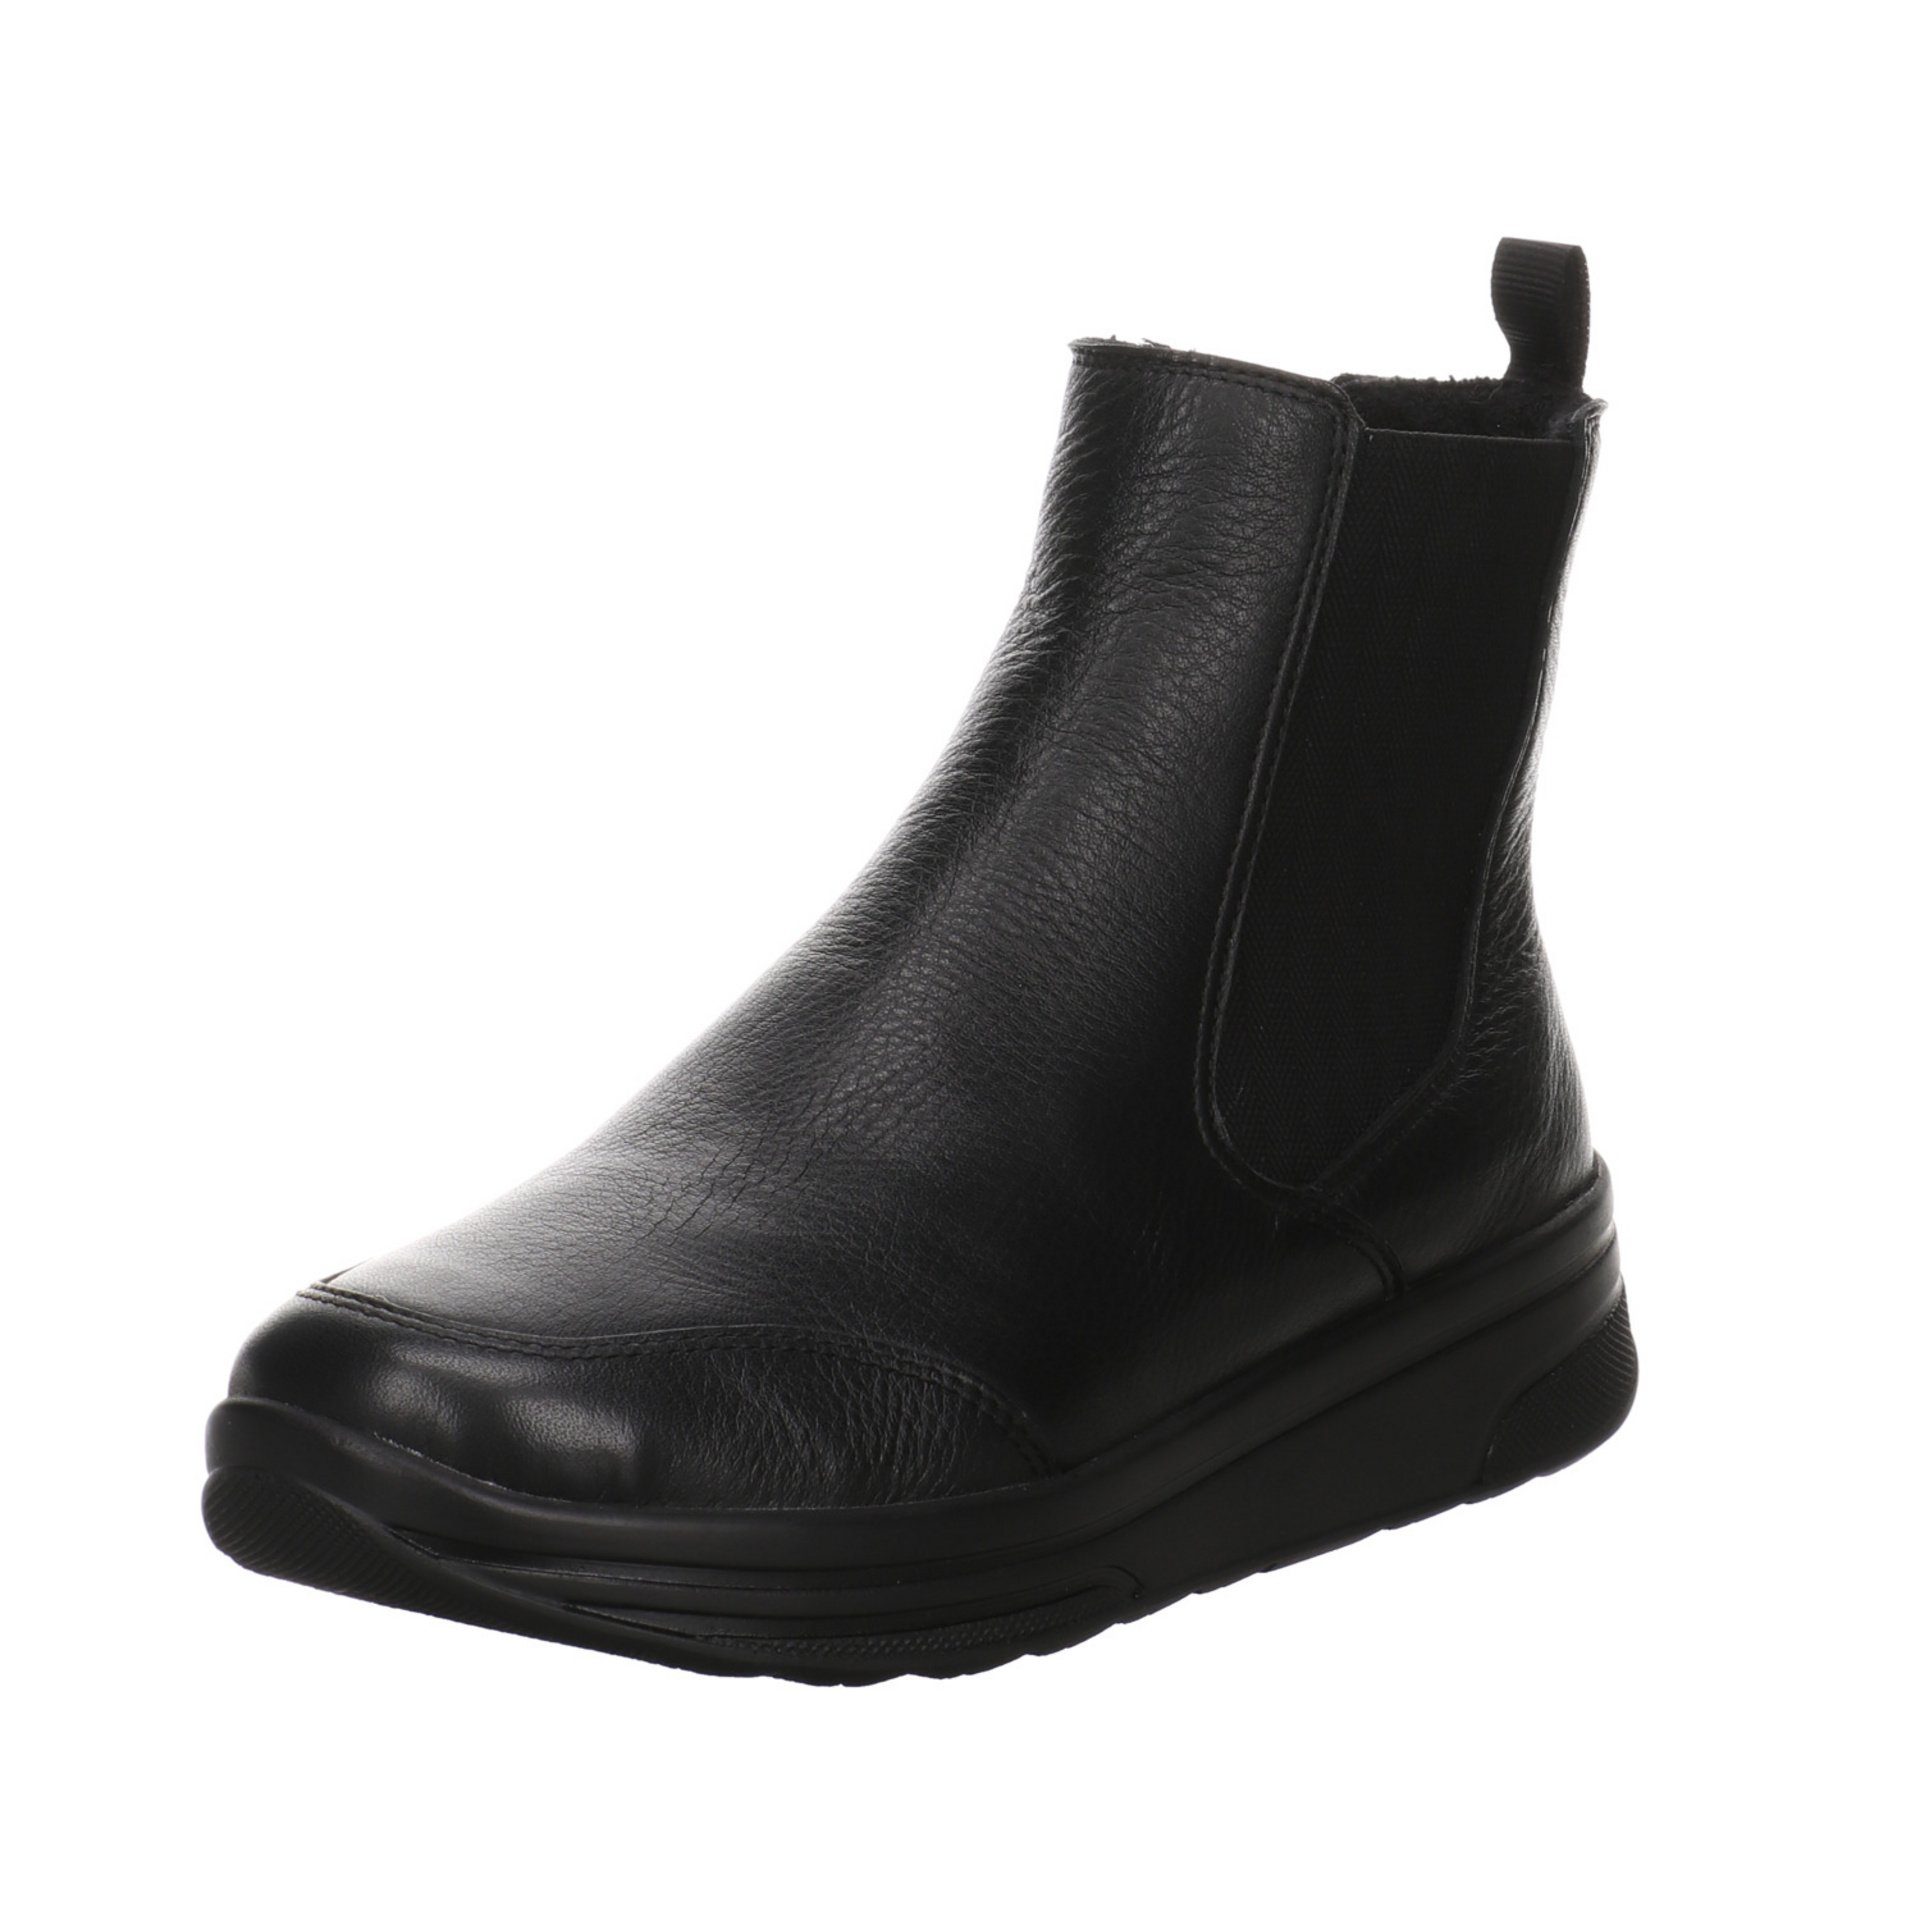 Ara Damen Stiefel Schuhe Sapporo-S 2.0 Chelsea Boots Stiefelette Glattleder schwarz 046832